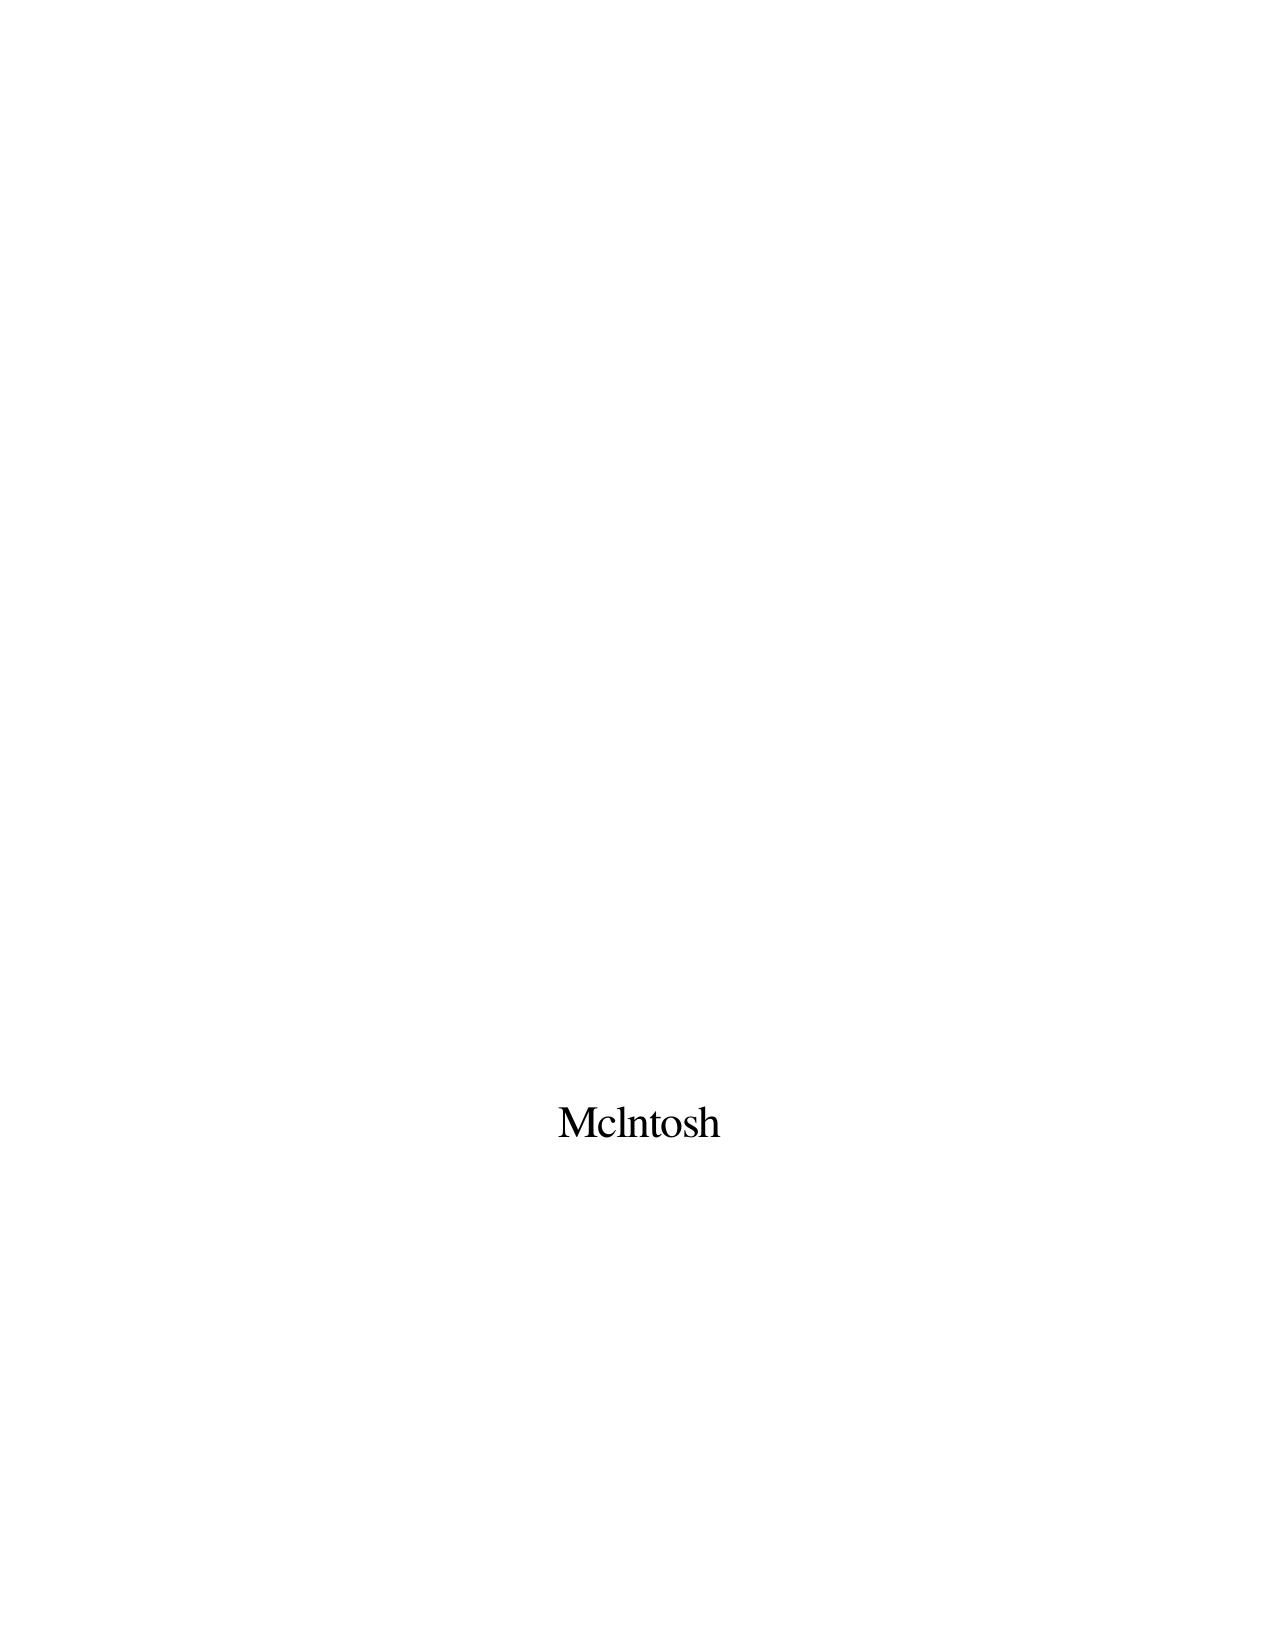 McIntosh MI 3 Brochure